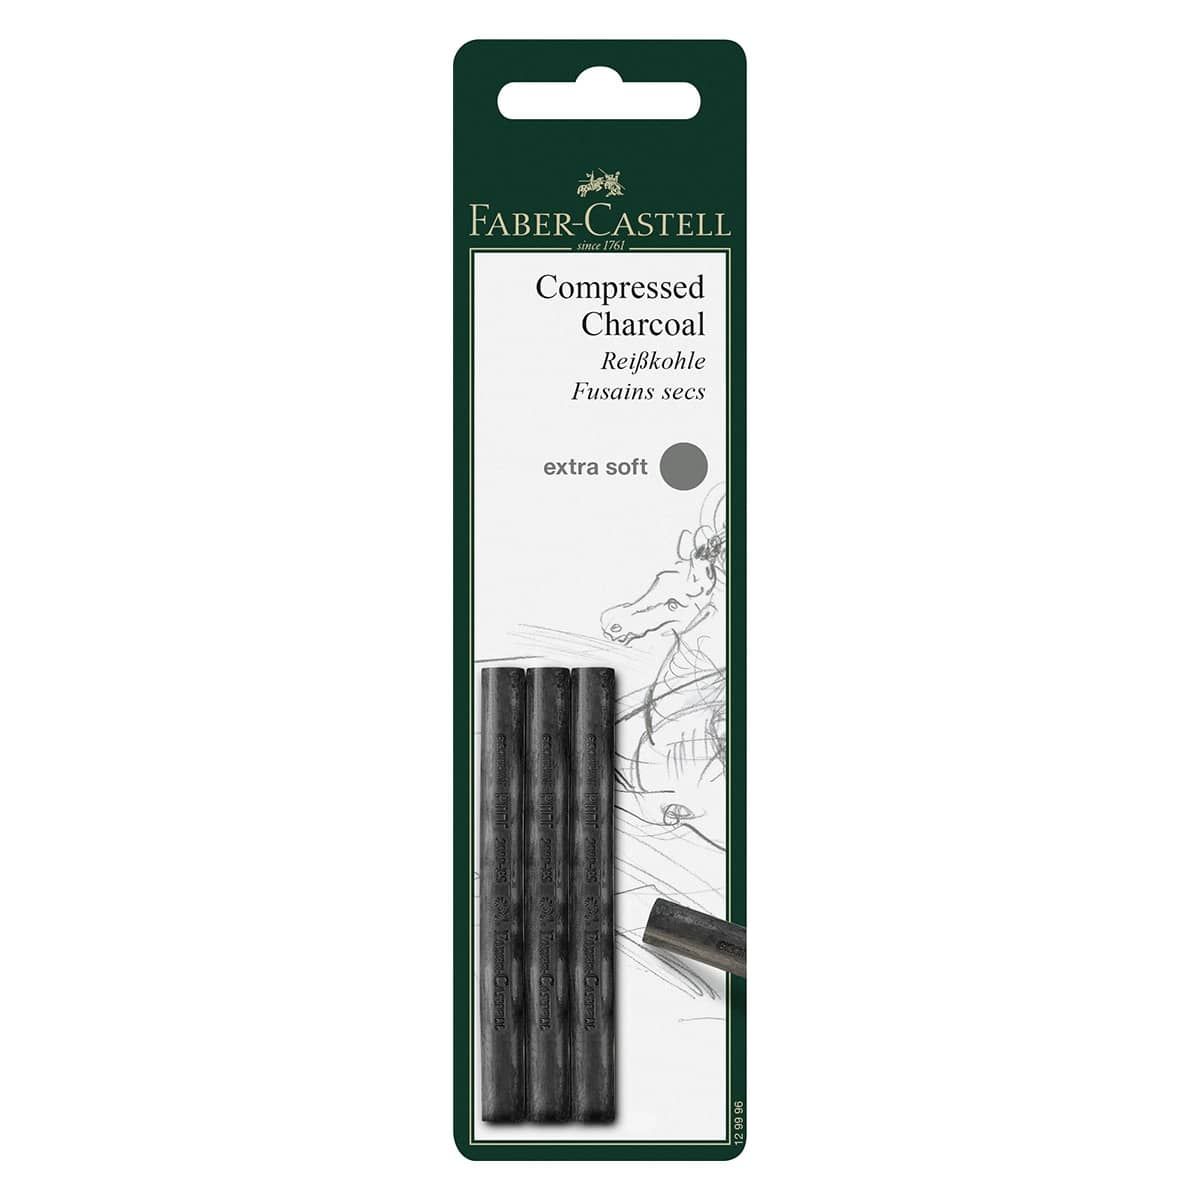 Faber-Castell Pitt Compressed Charcoal Sticks - Extra Soft - Set of 3